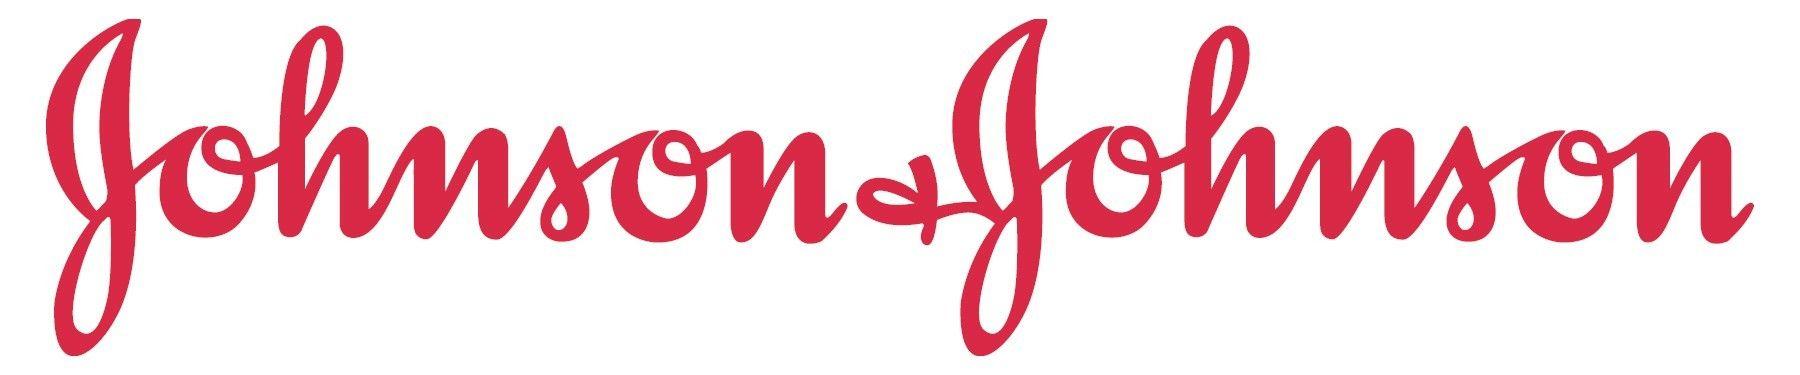 Johnson and Johnson Logo - Janssen Biotech Inc., a Johnson & Johnson (JNJ) company, announced